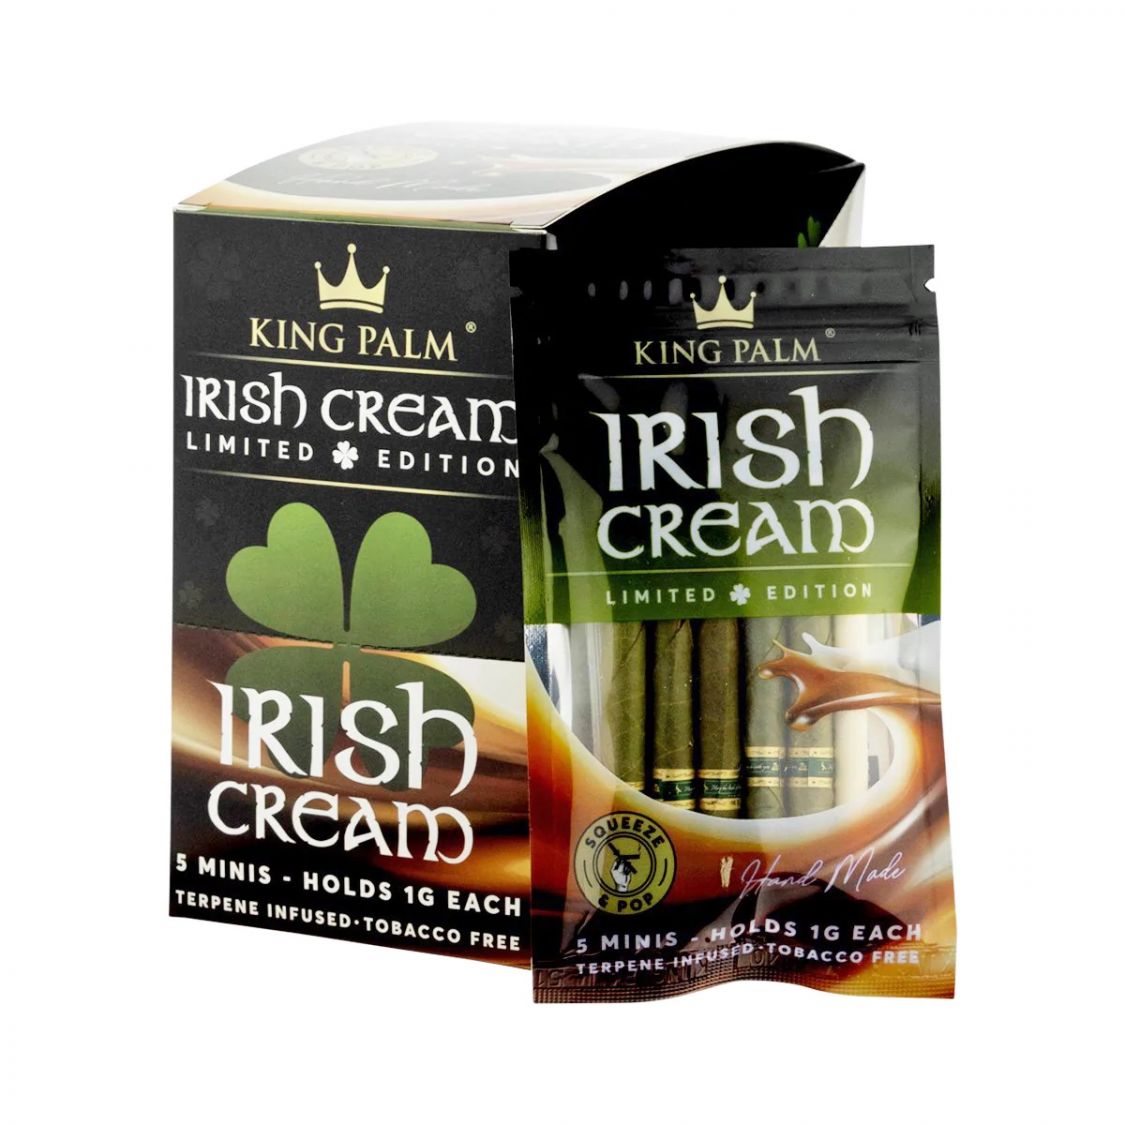 KING PALM Irish Cream Palm Leaf Accessories Paper / Rolling Supplies